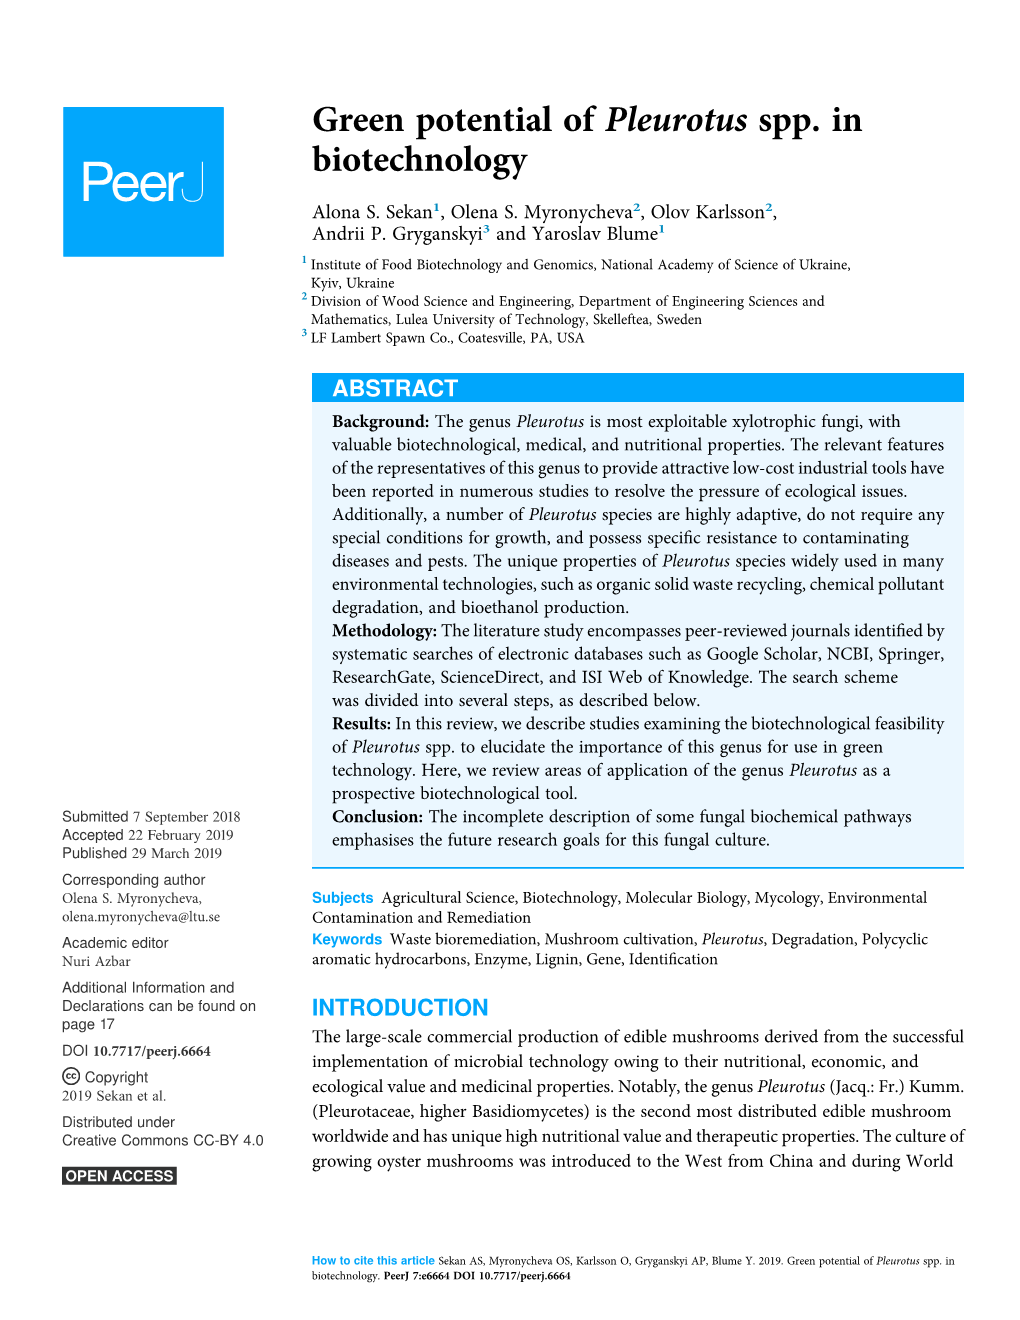 Green Potential of Pleurotus Spp. in Biotechnology